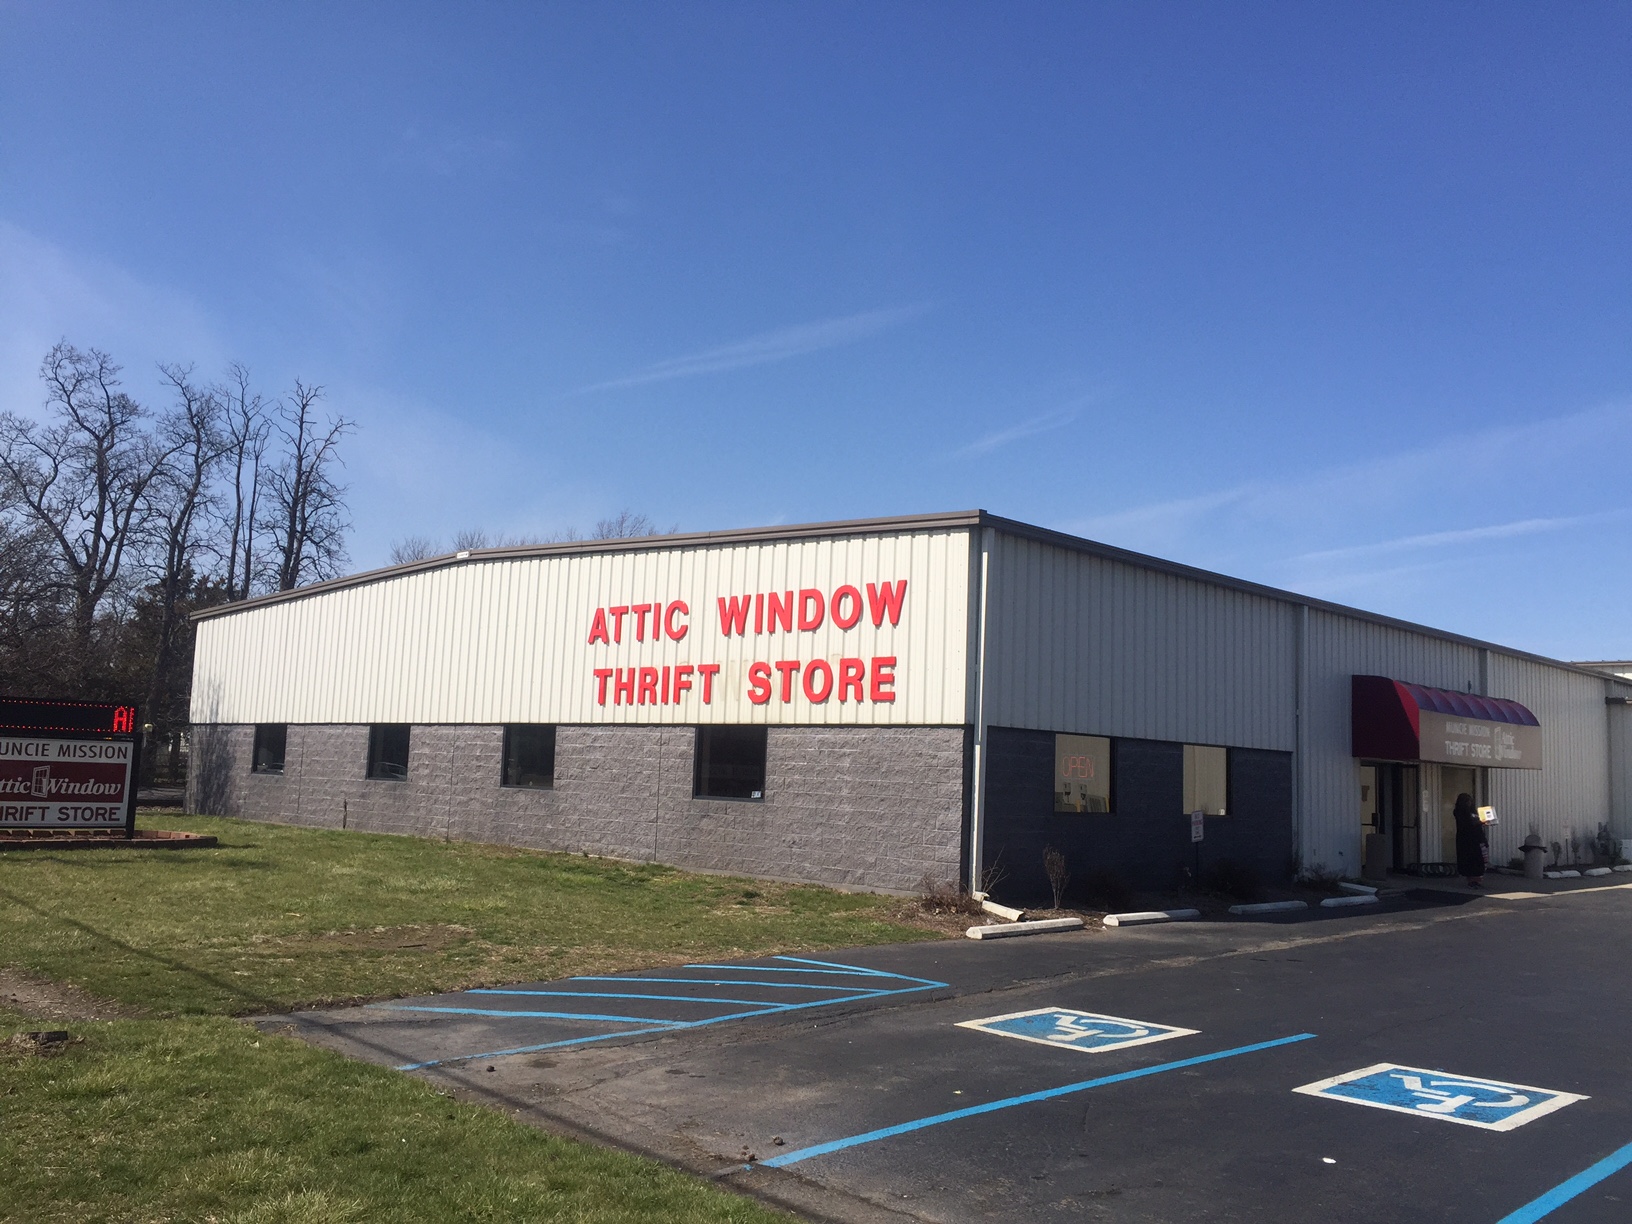 Attic Window